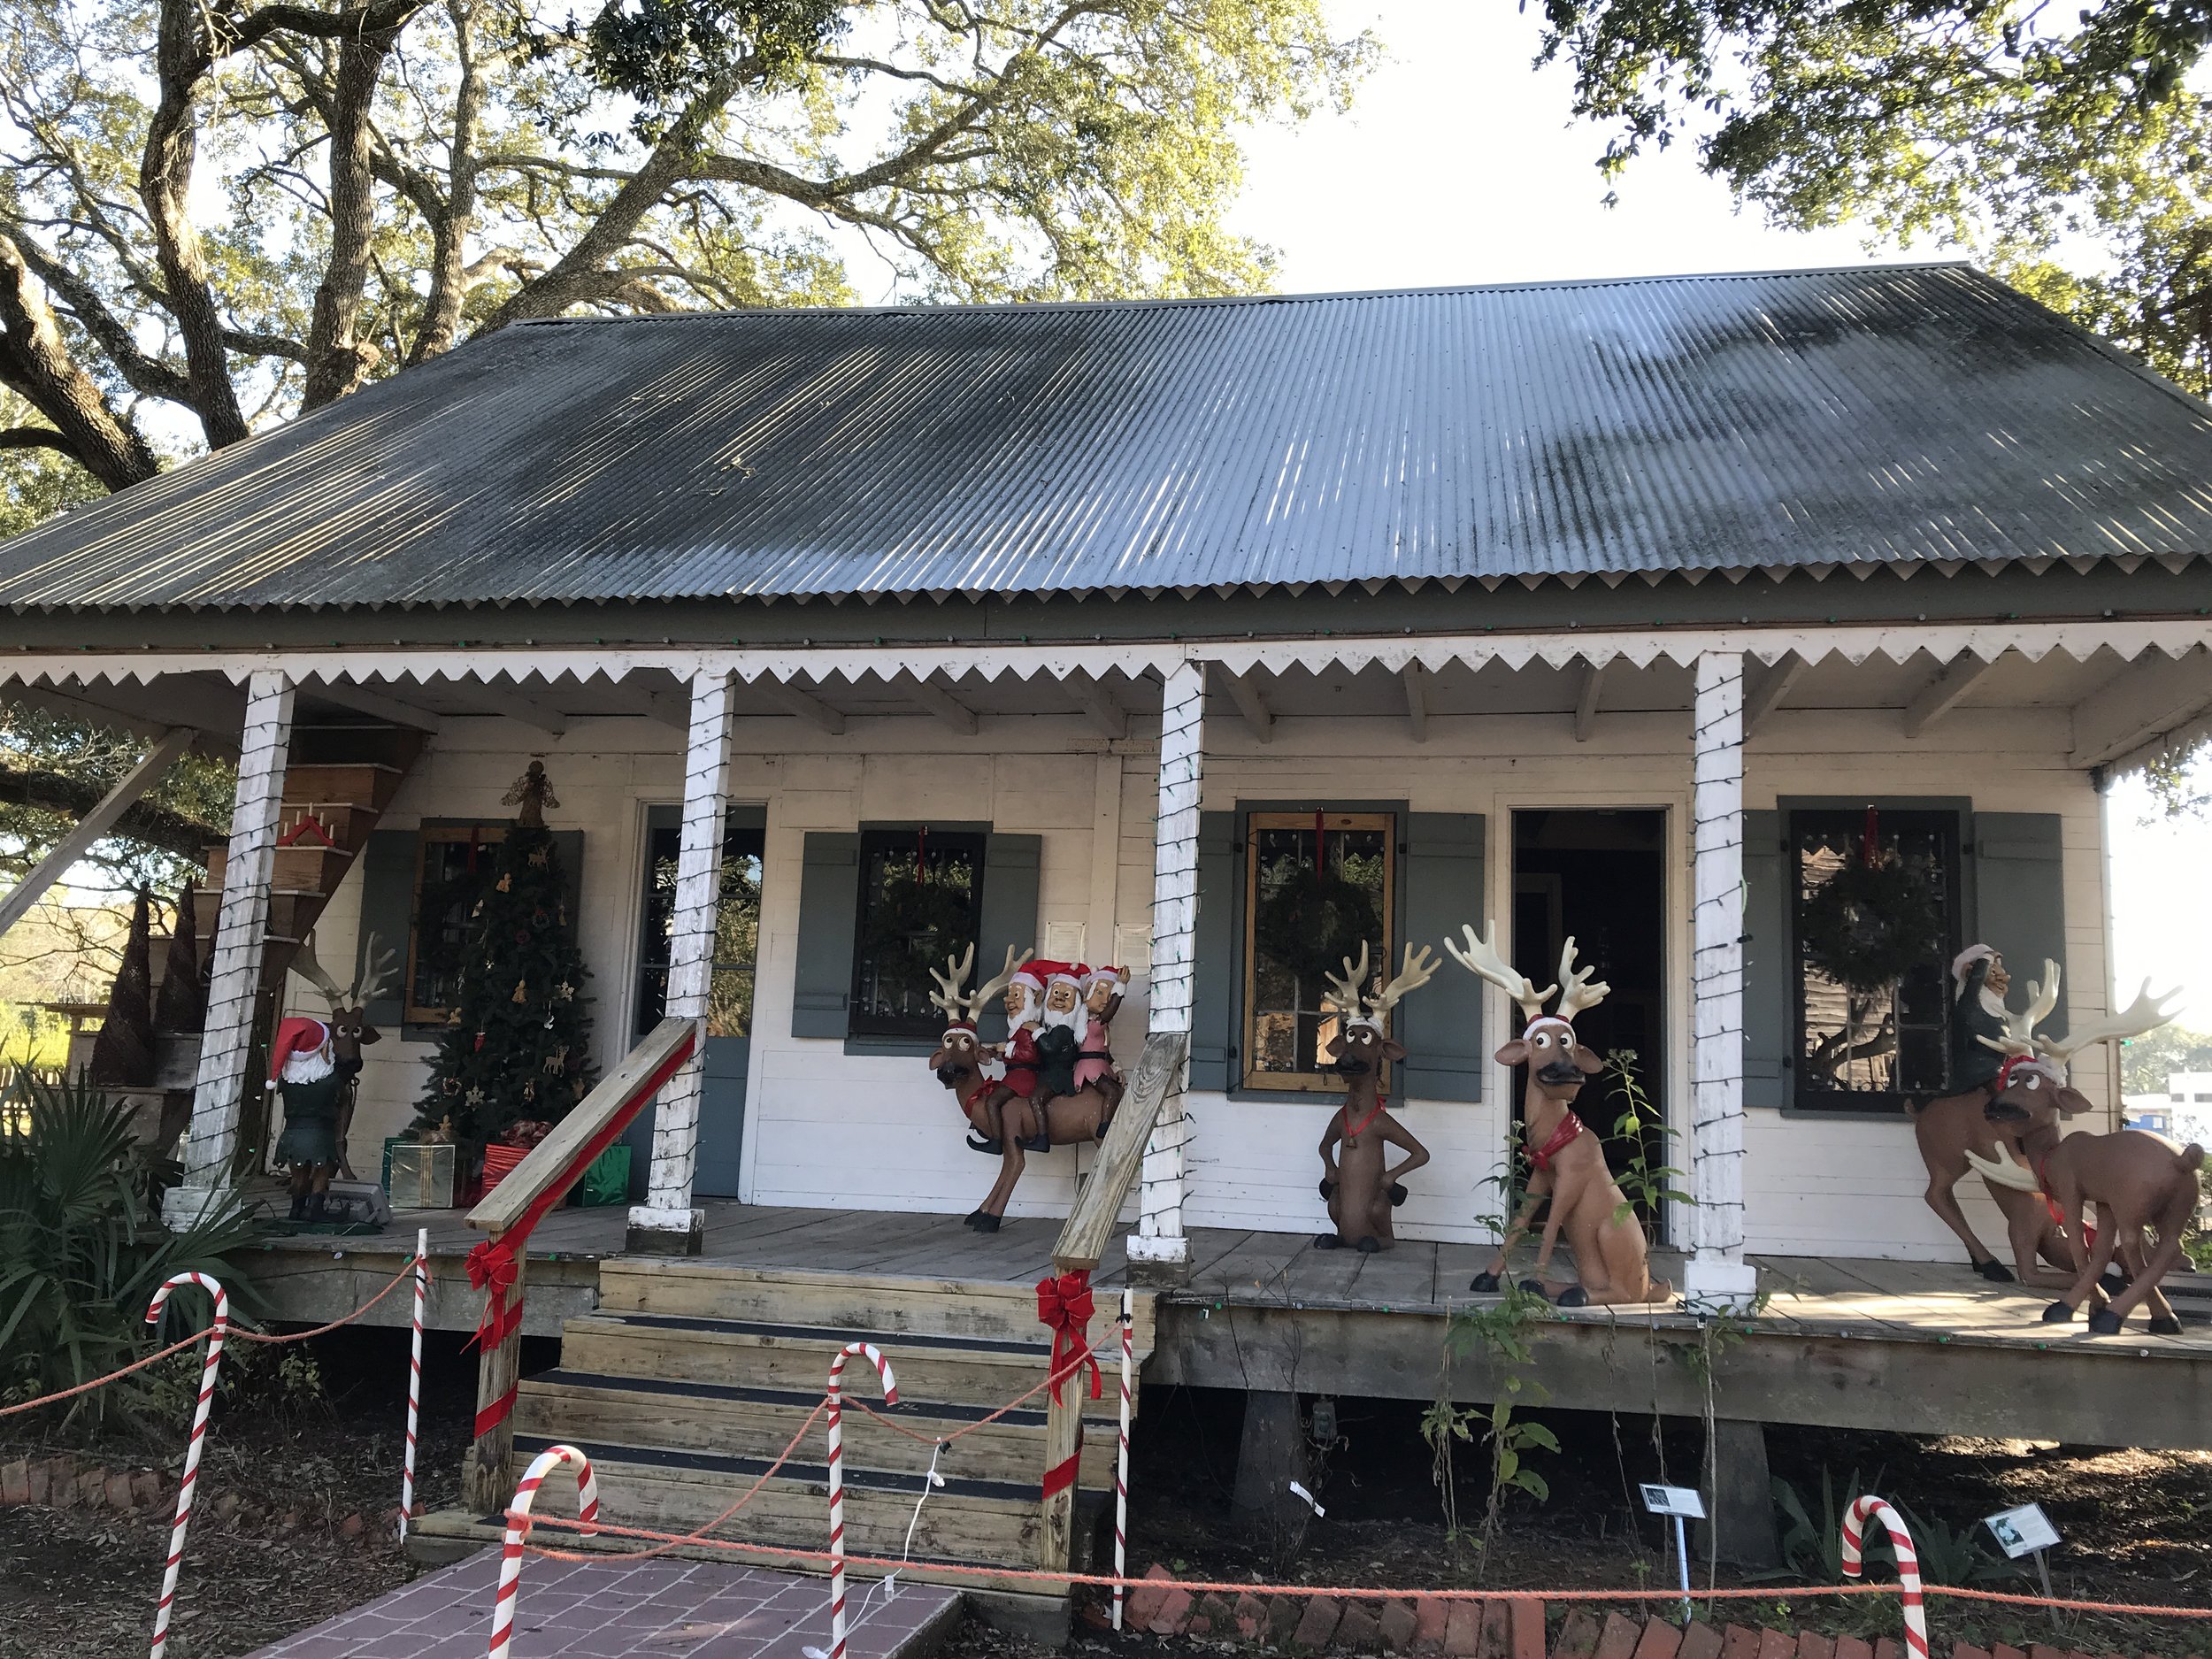 Christmas decorations around a typical Louisiana farmhouse